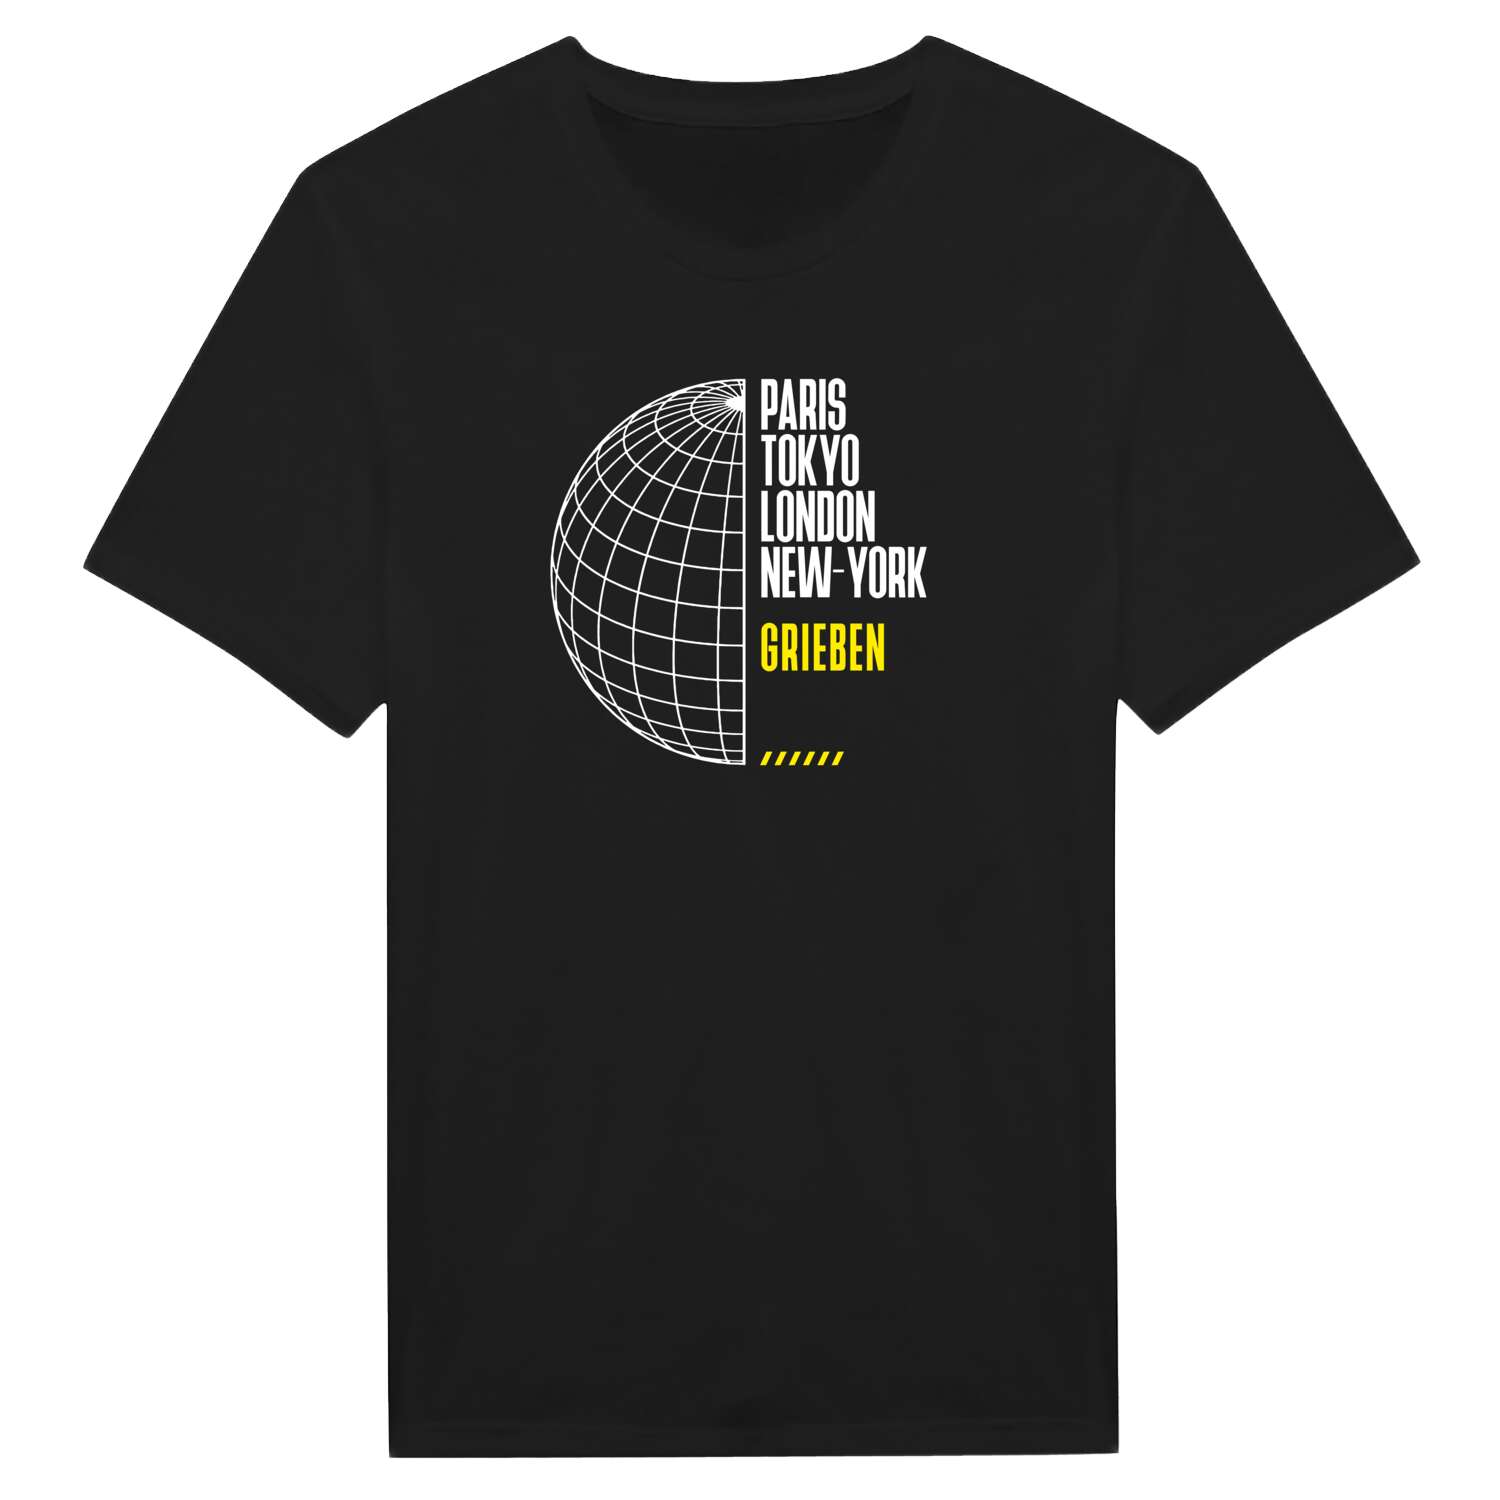 Grieben T-Shirt »Paris Tokyo London«